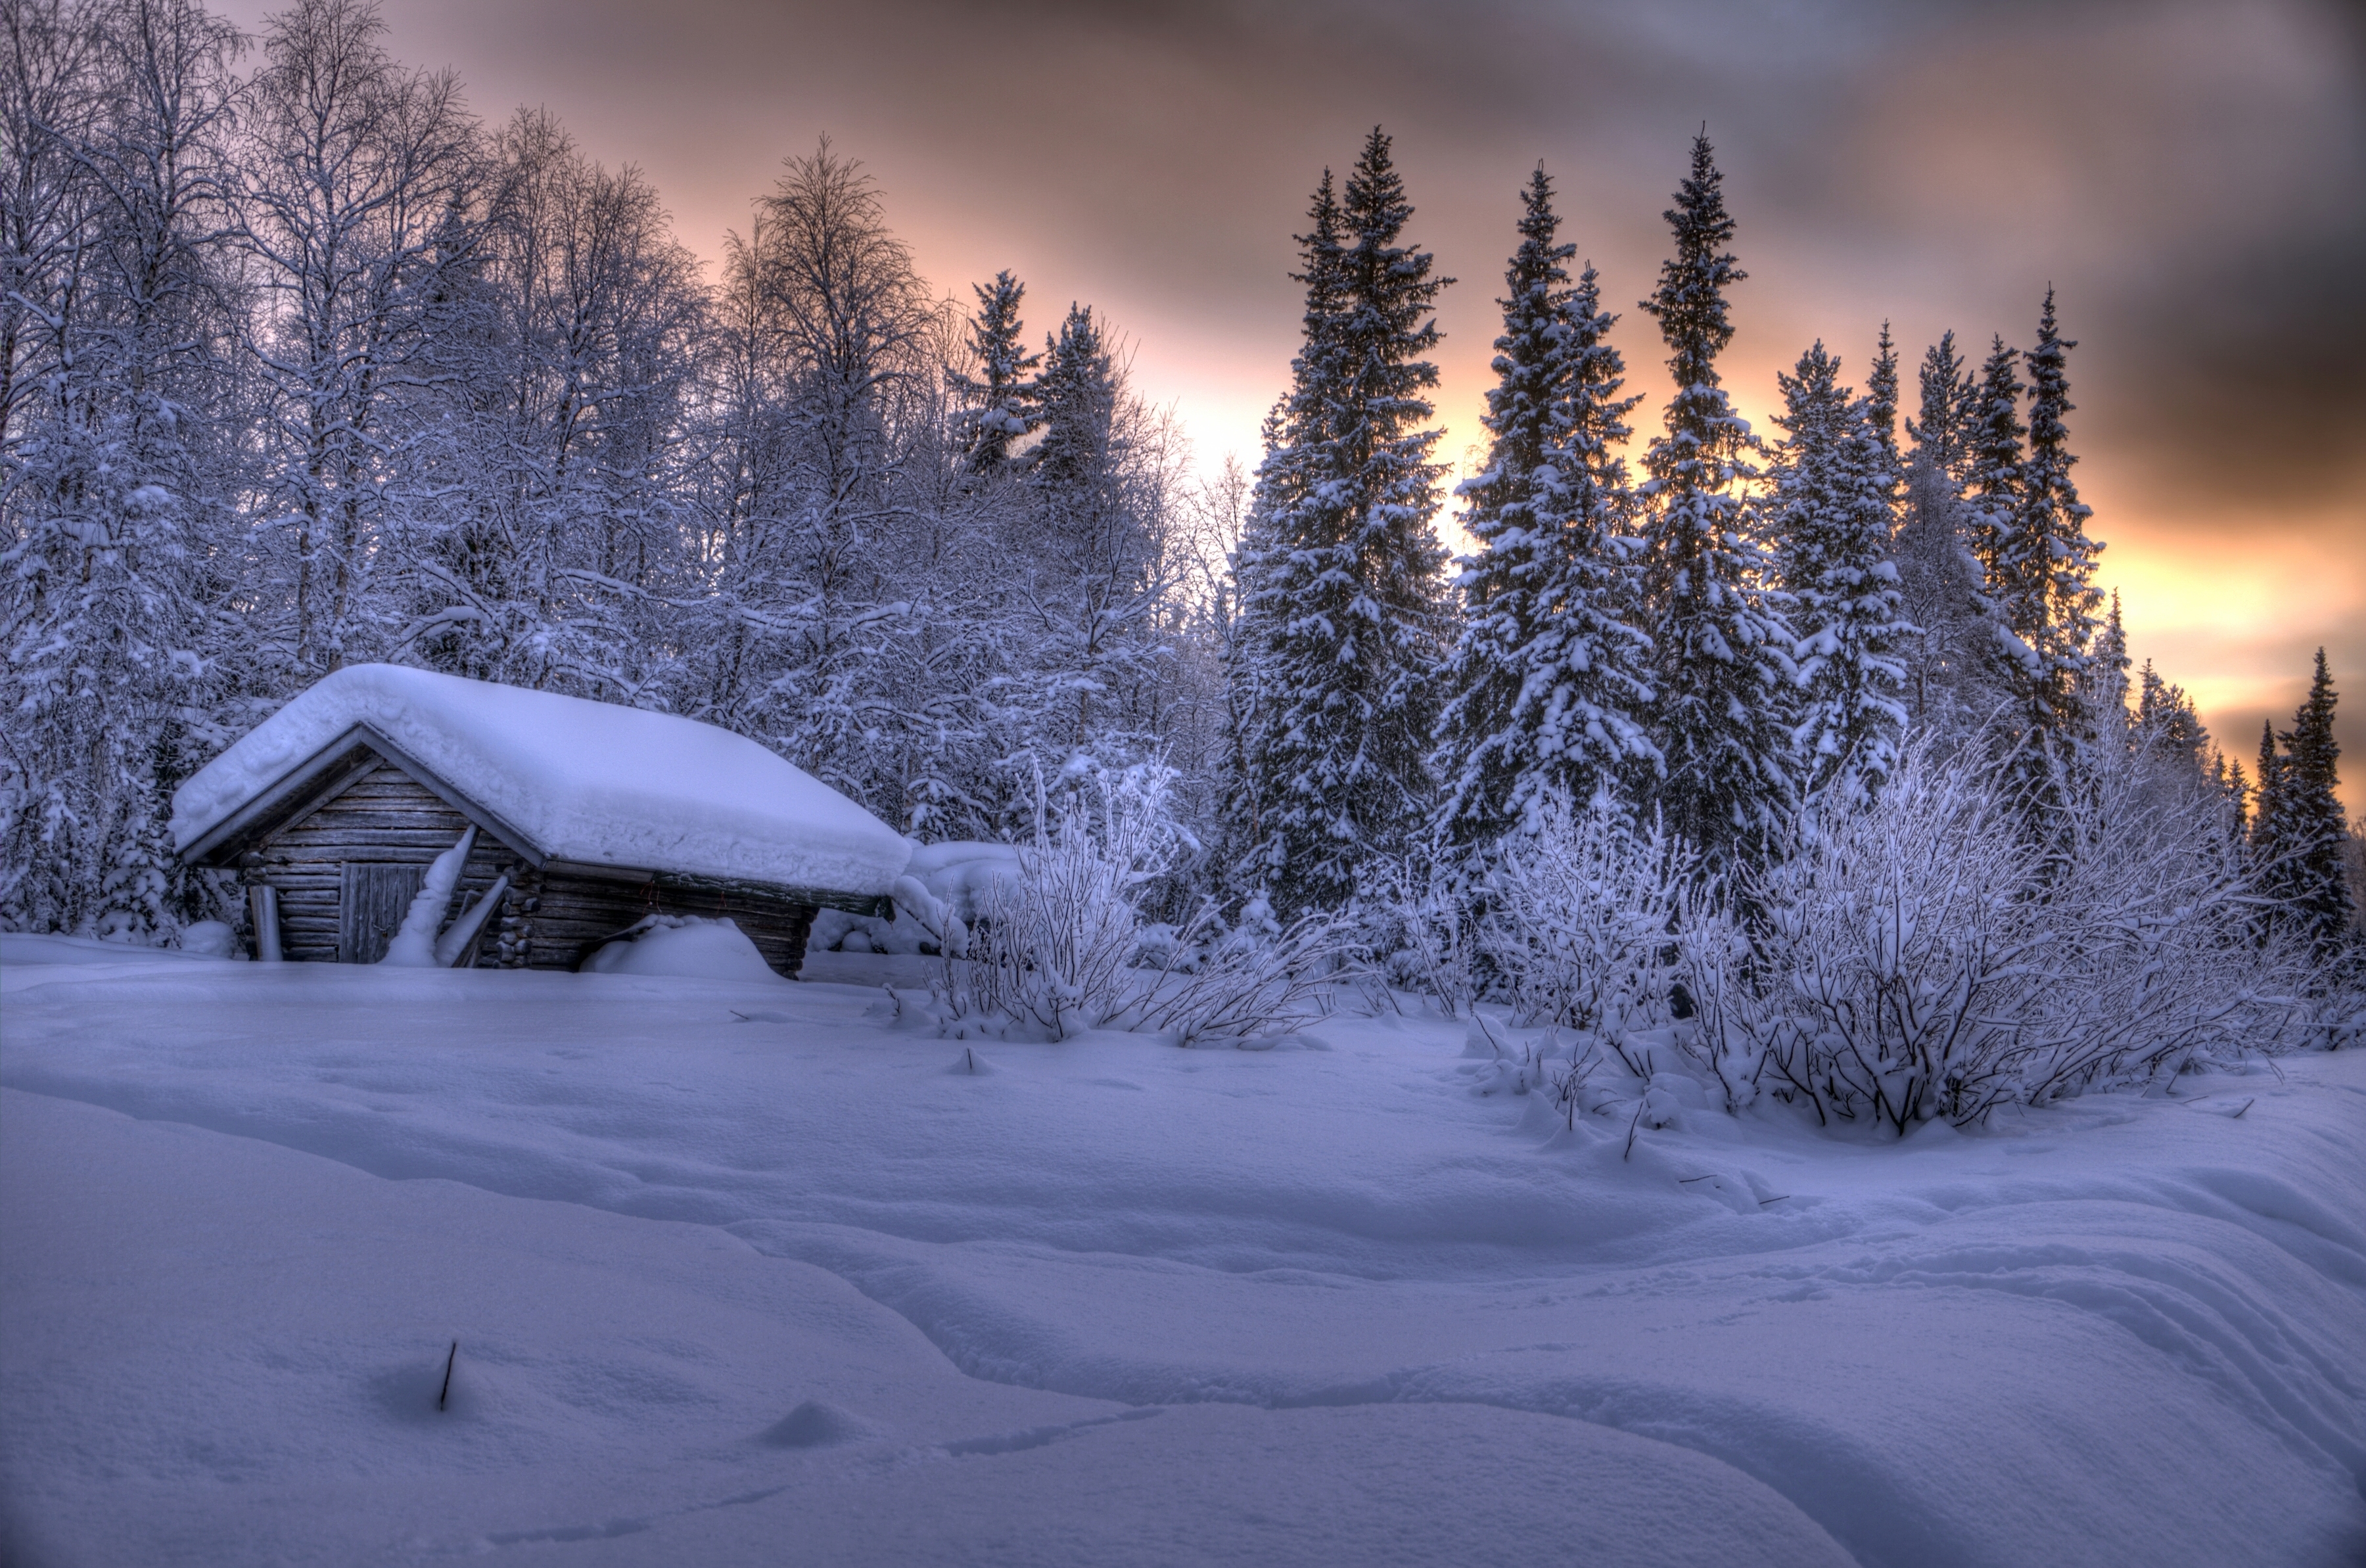 Пейзаж зимний лес. Финляндия зимняя избушка. Зима в лесу. Избушка в лесу зимой. Домик в зимнем лесу.